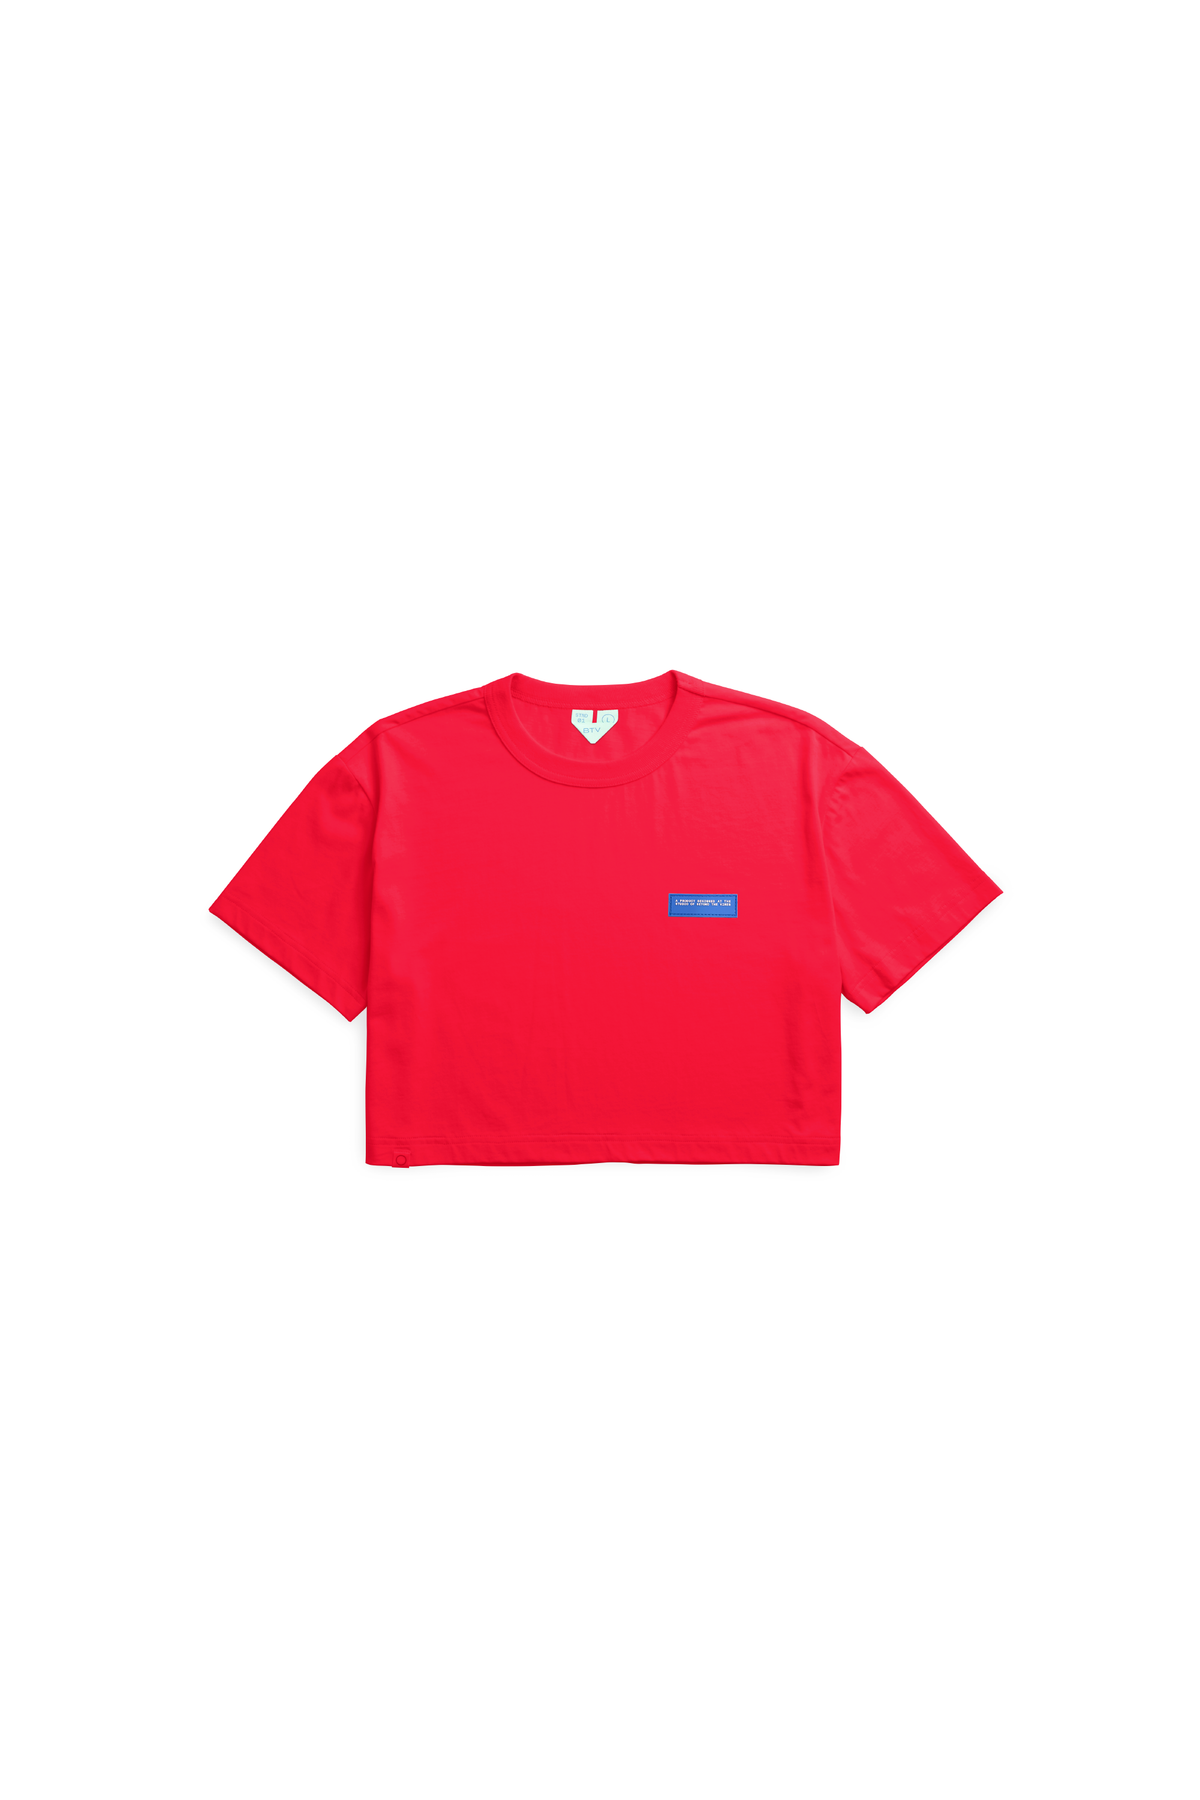 【Dolce\u0026Gabbana】ボクシーフィット Tシャツ Lサイズ(50) 赤コットン100%